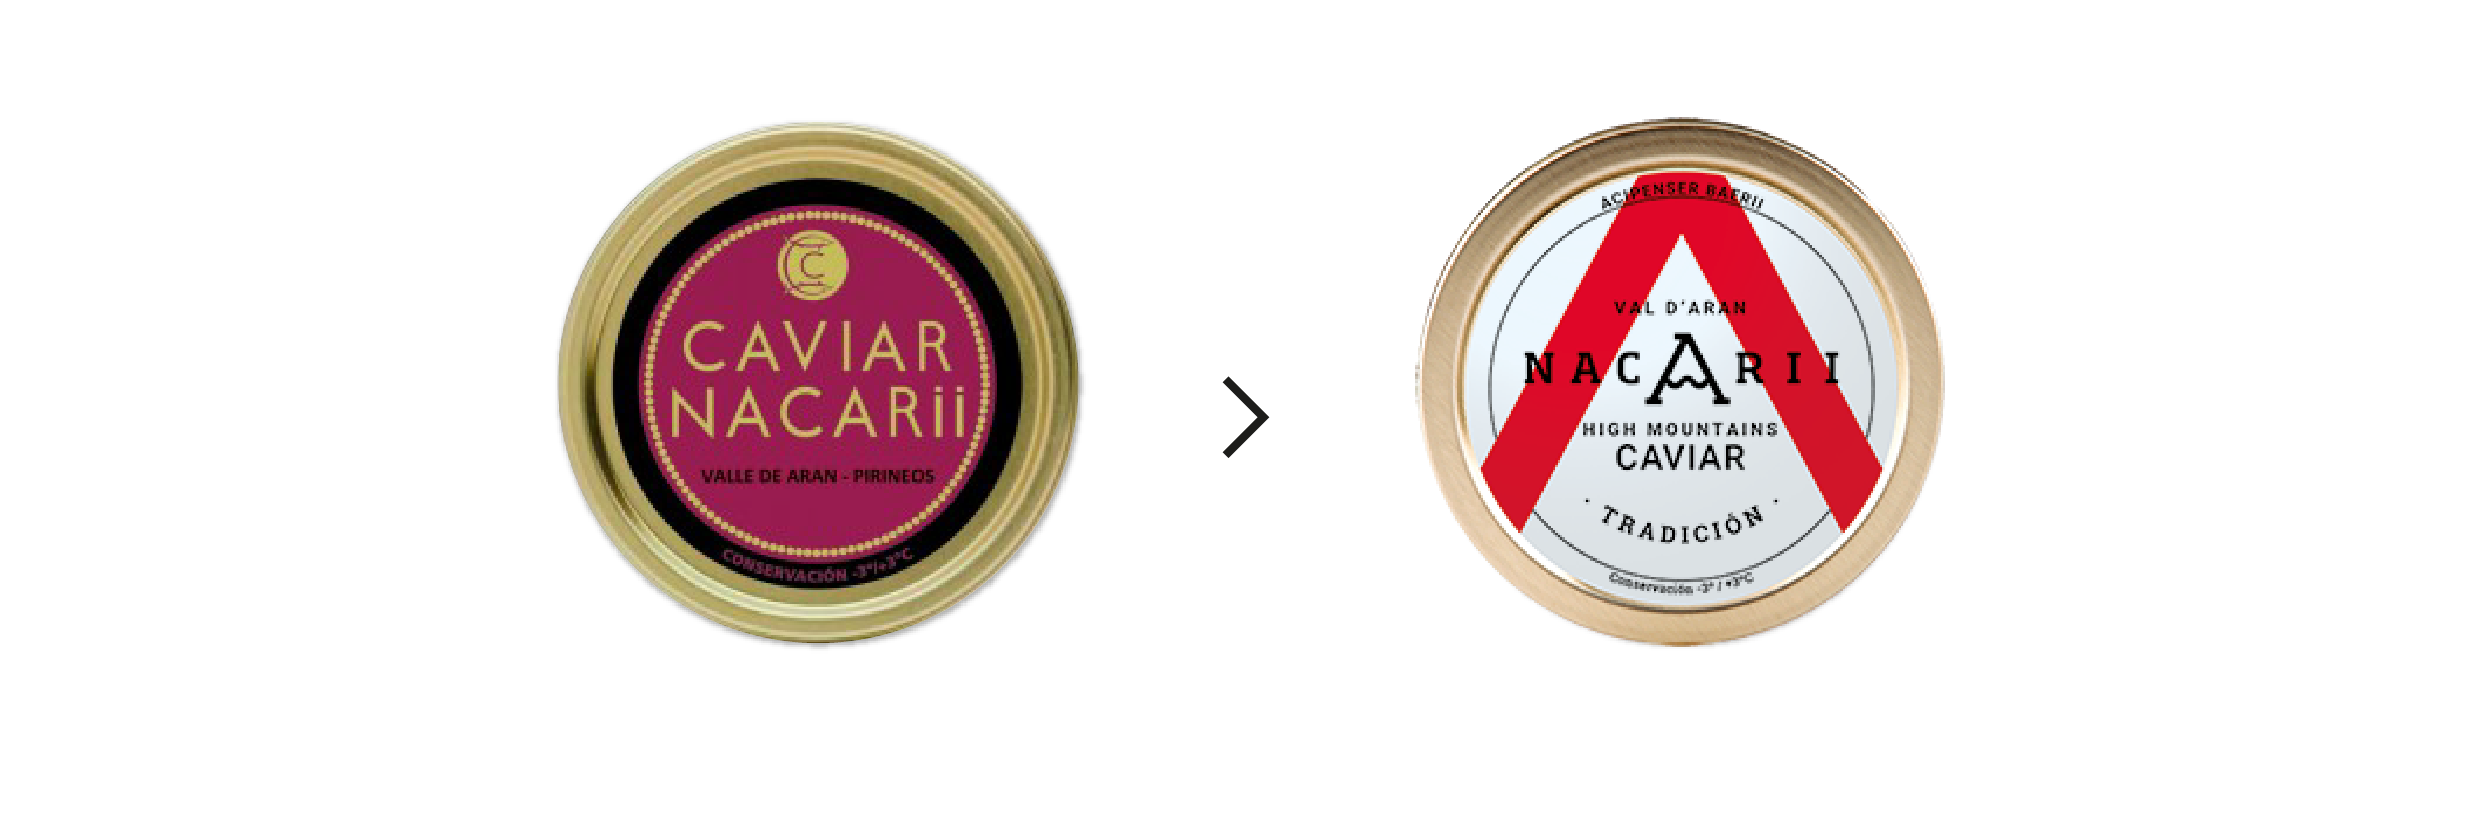 Caviar Nacarii Rediseño